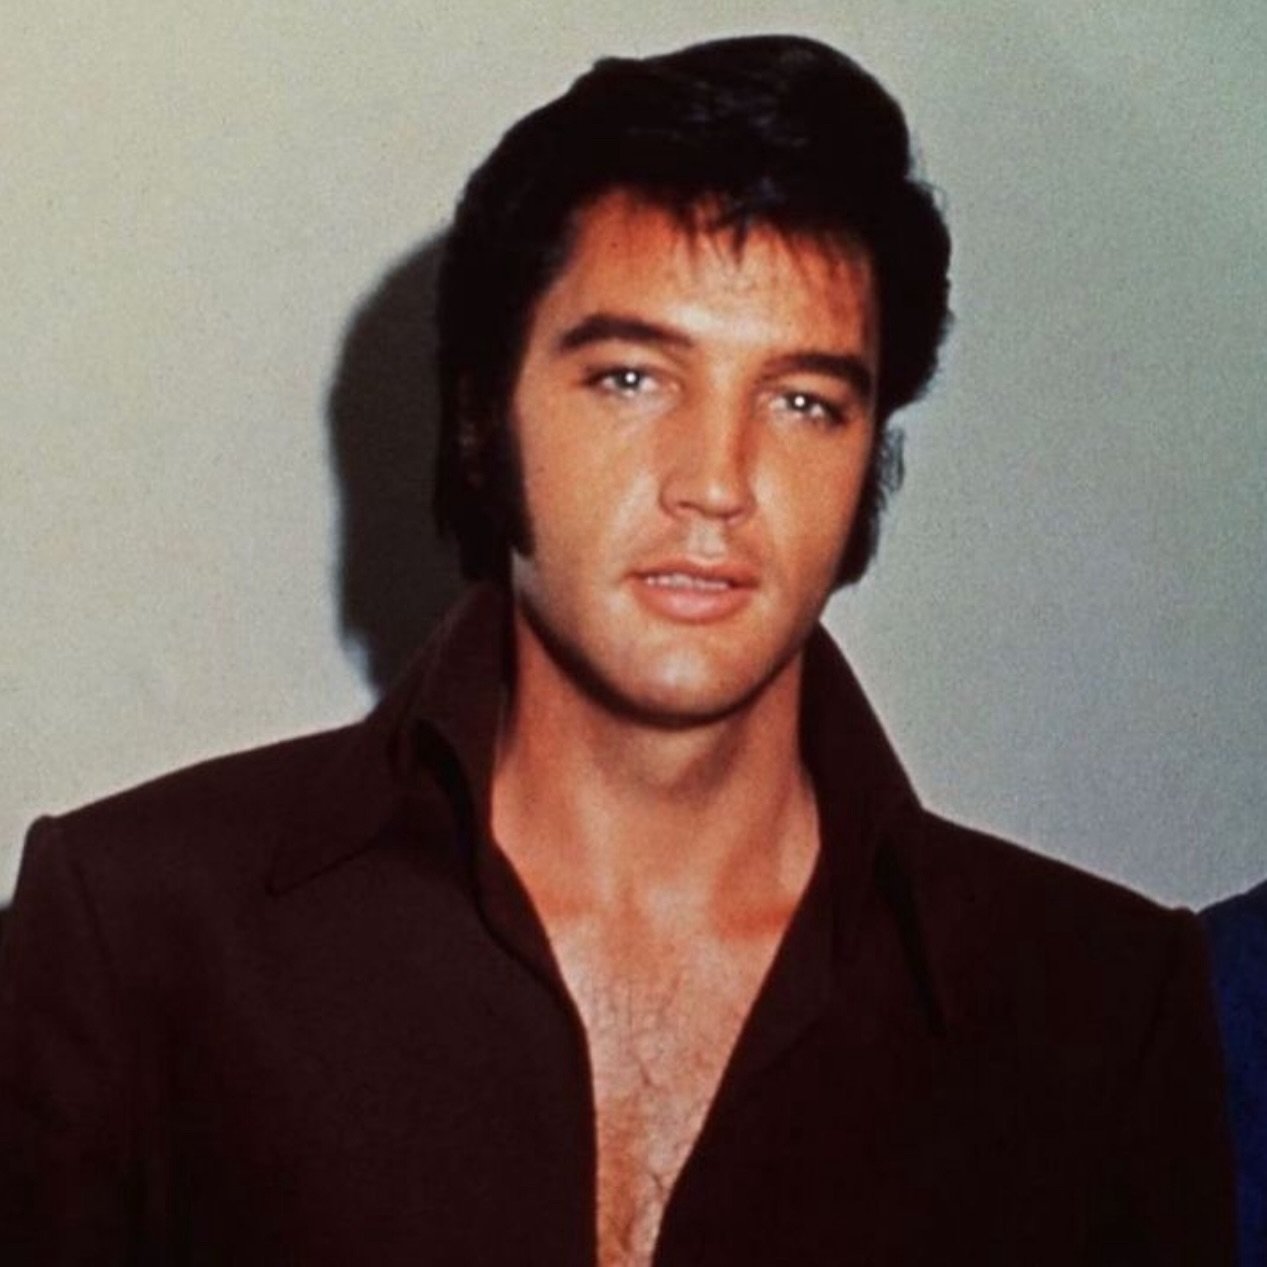 Elvis at the Las Vegas International Hotel (1969)

⚡️
⚡️
⚡️
⚡️
⚡️
⚡️
⚡️
#elvis #elvispresley #alwayselvis #graceland #thekimgofrocknroll #theking #tcb #memphis #tennessee #sunrecords #rca #jumpsuit #ontour #lasvegas